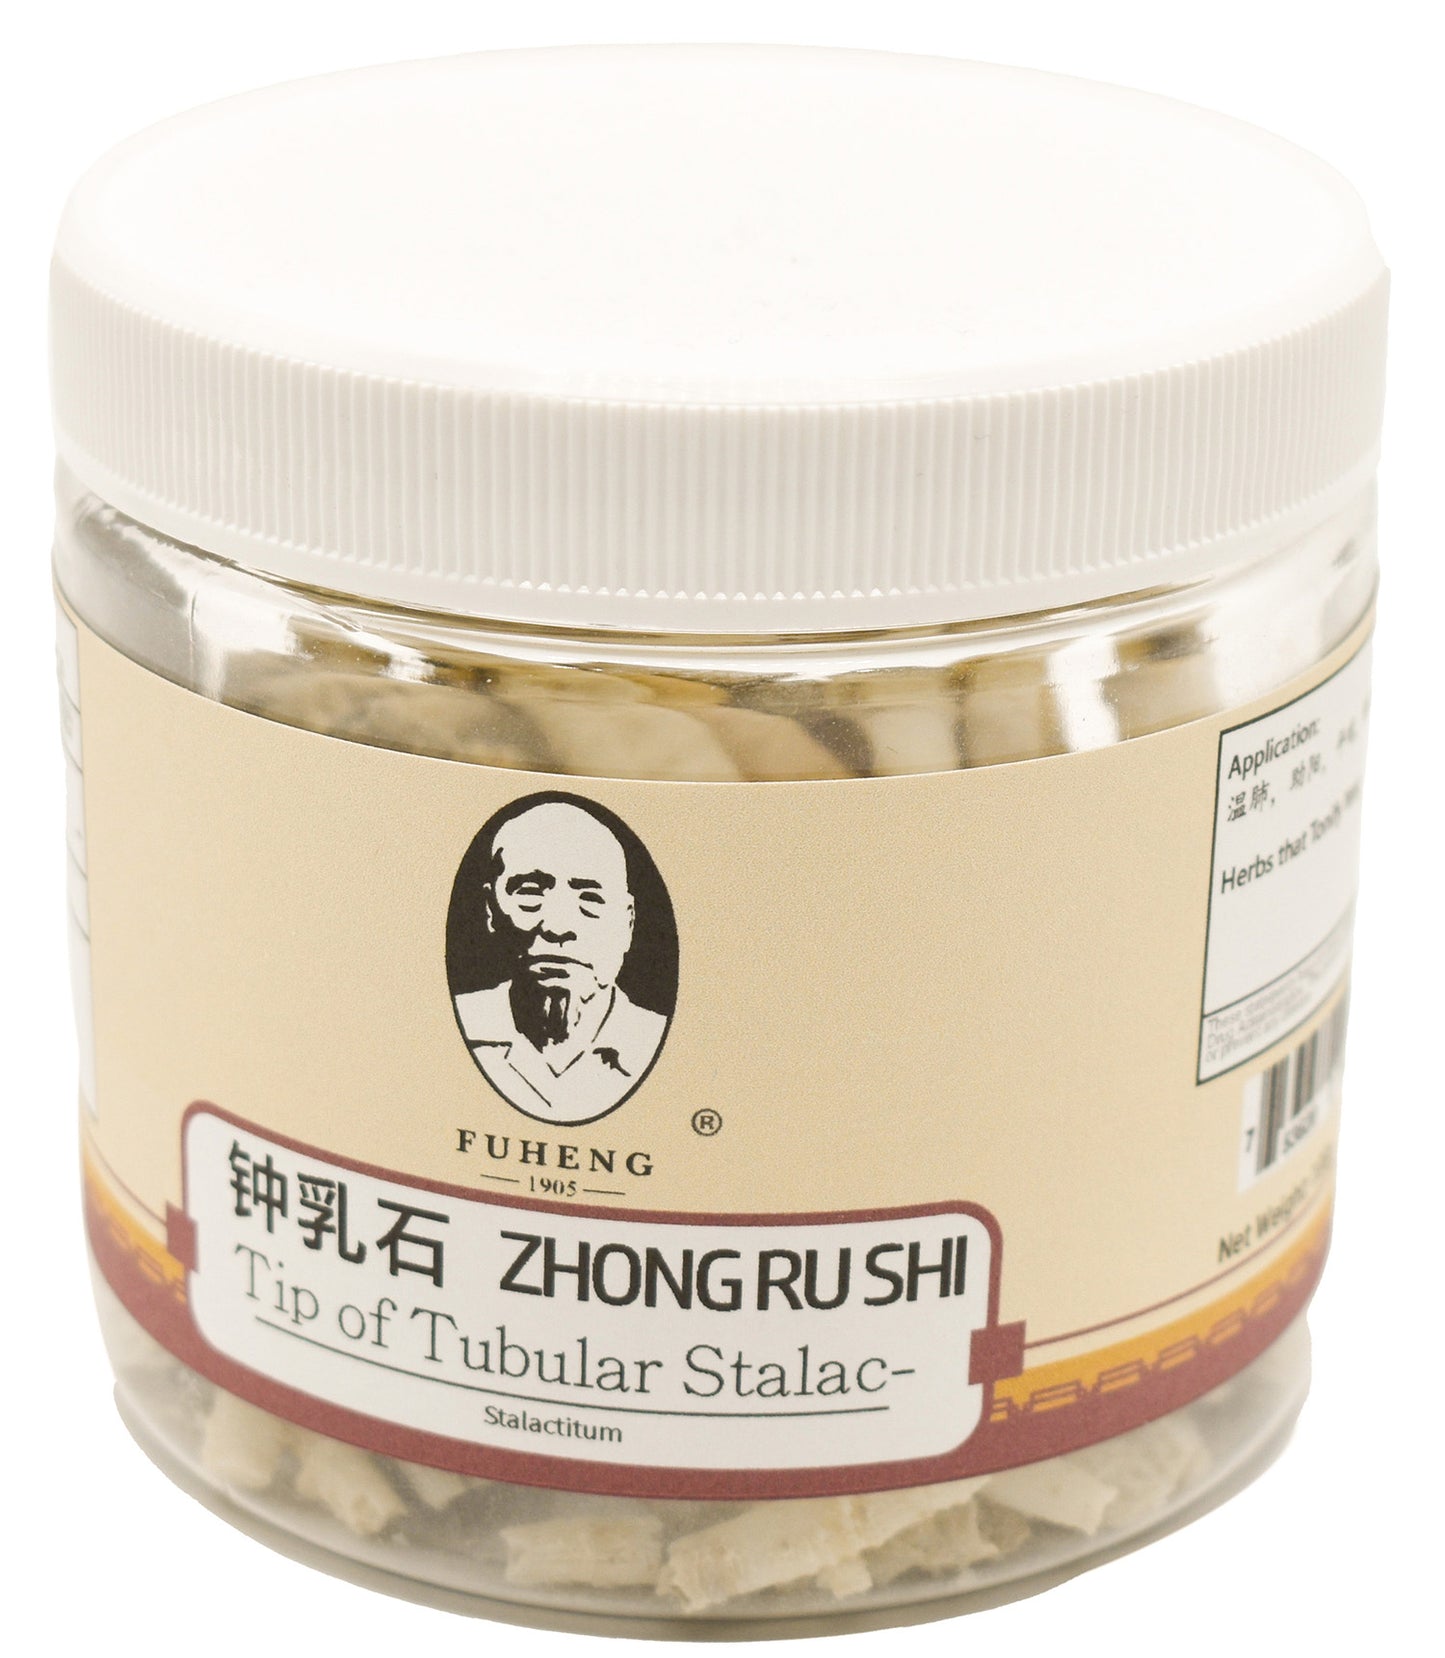 ZHONG RU SHI - 钟乳石 - Tip of Tubular Stalactites - FUHENG福恒 - Since 1905 - 100g